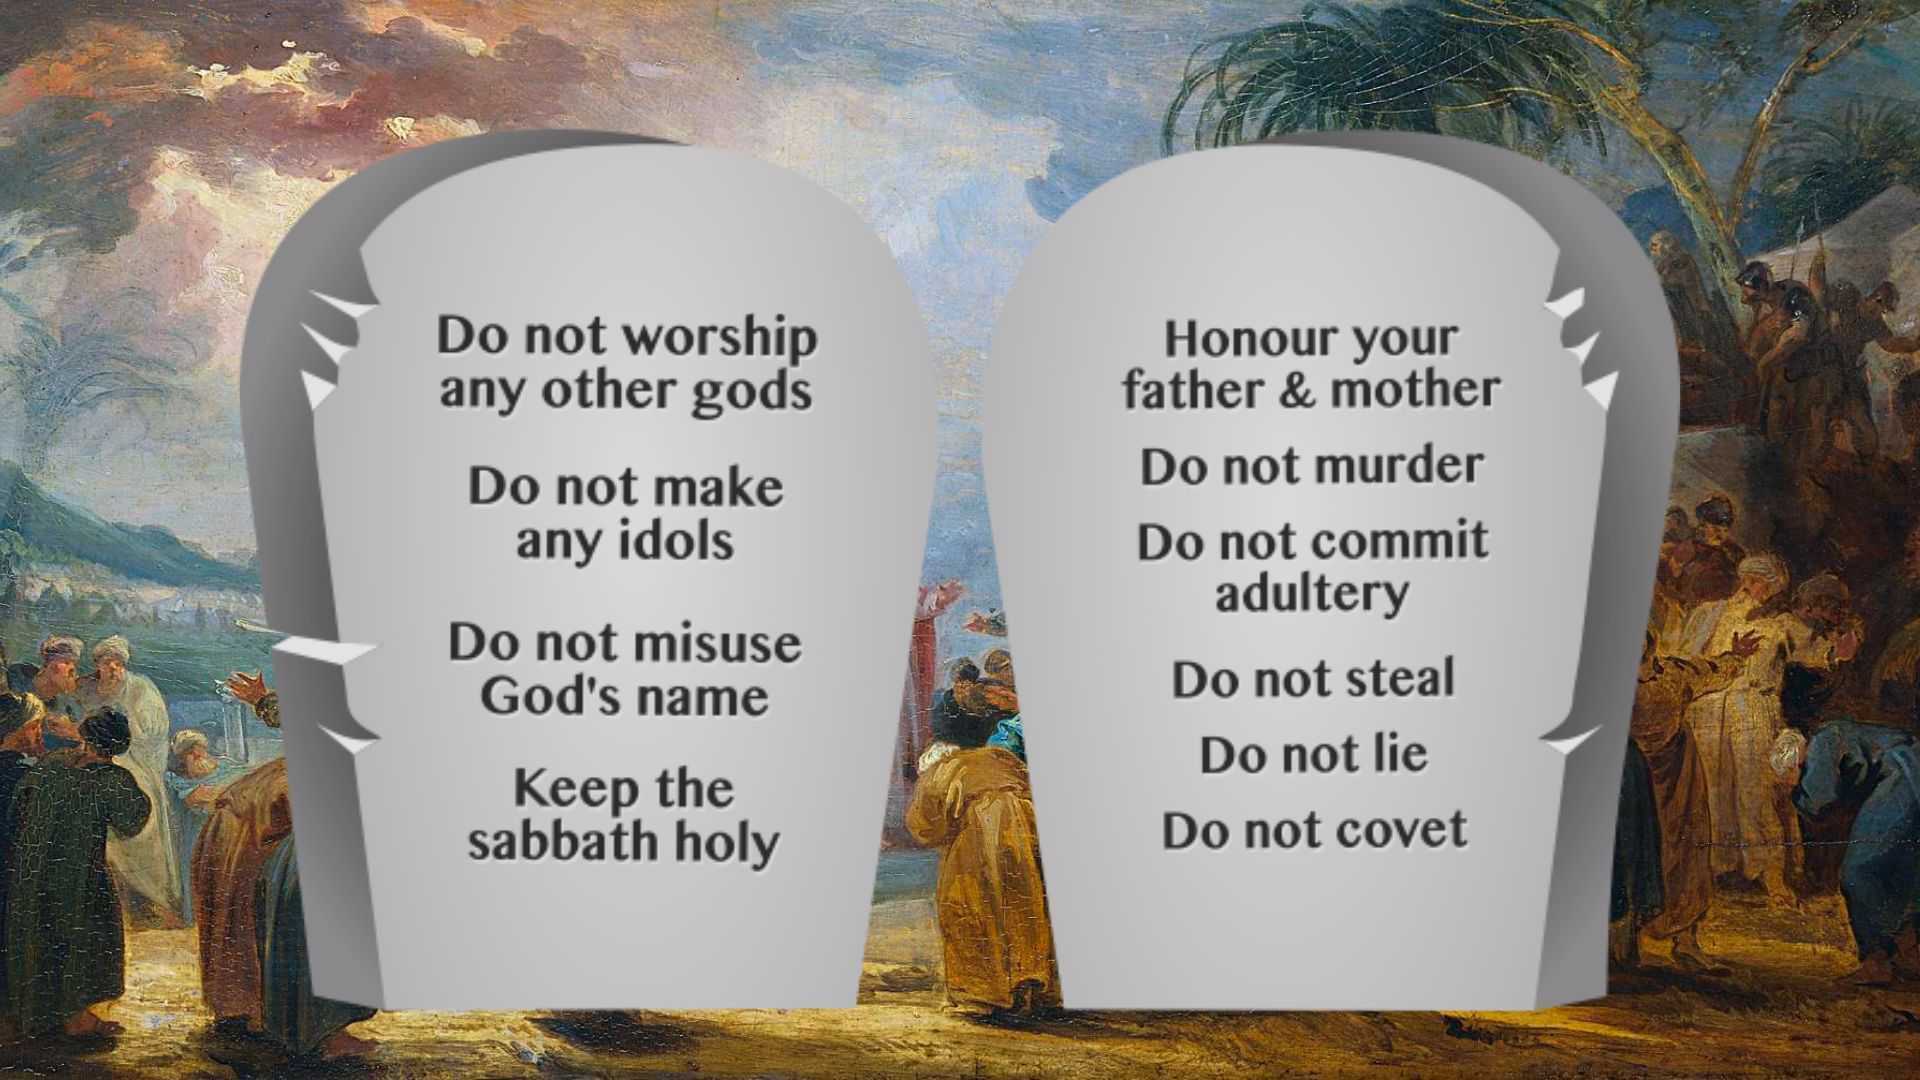 10 Commandments in Islam: